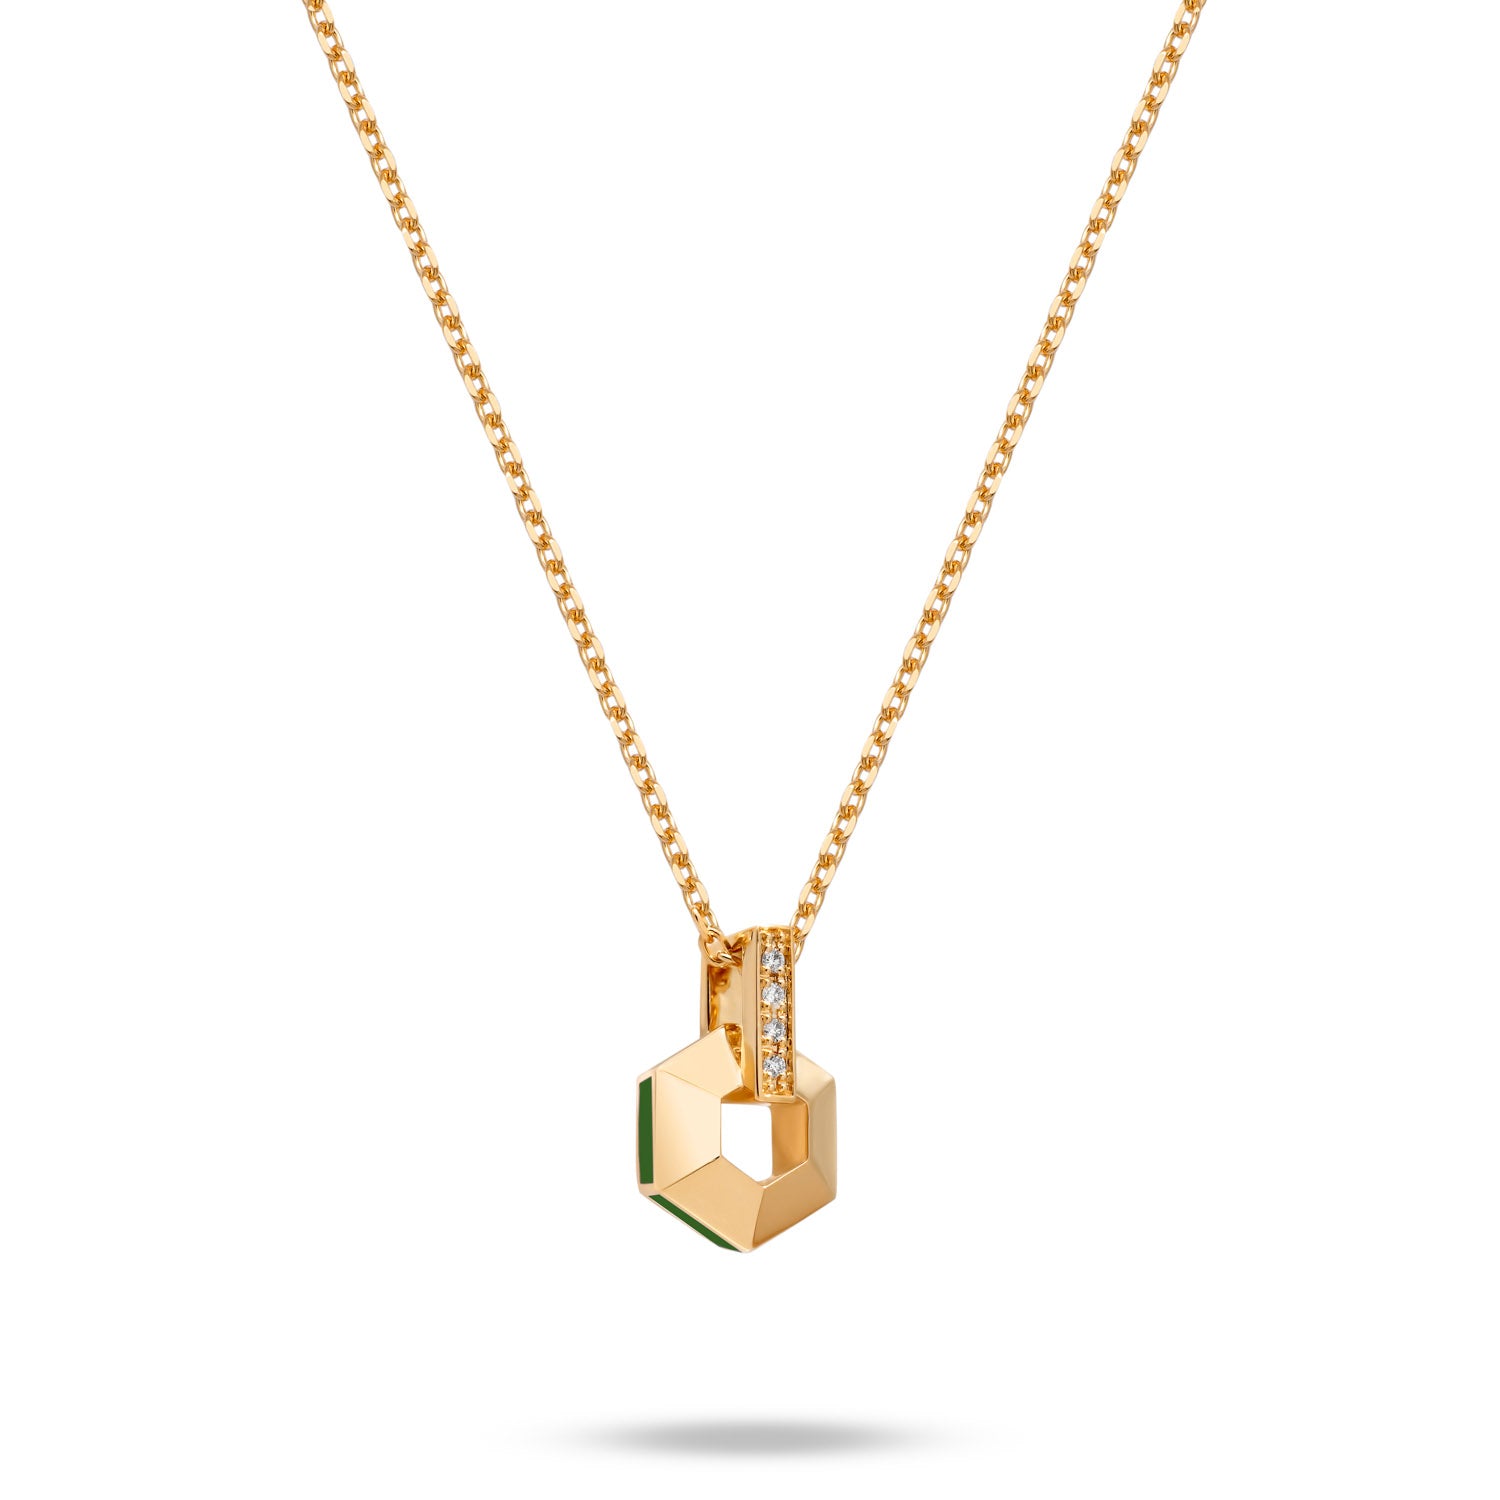 HONEY HONEY Small Honeycomb Necklace with Enamel and Diamonds